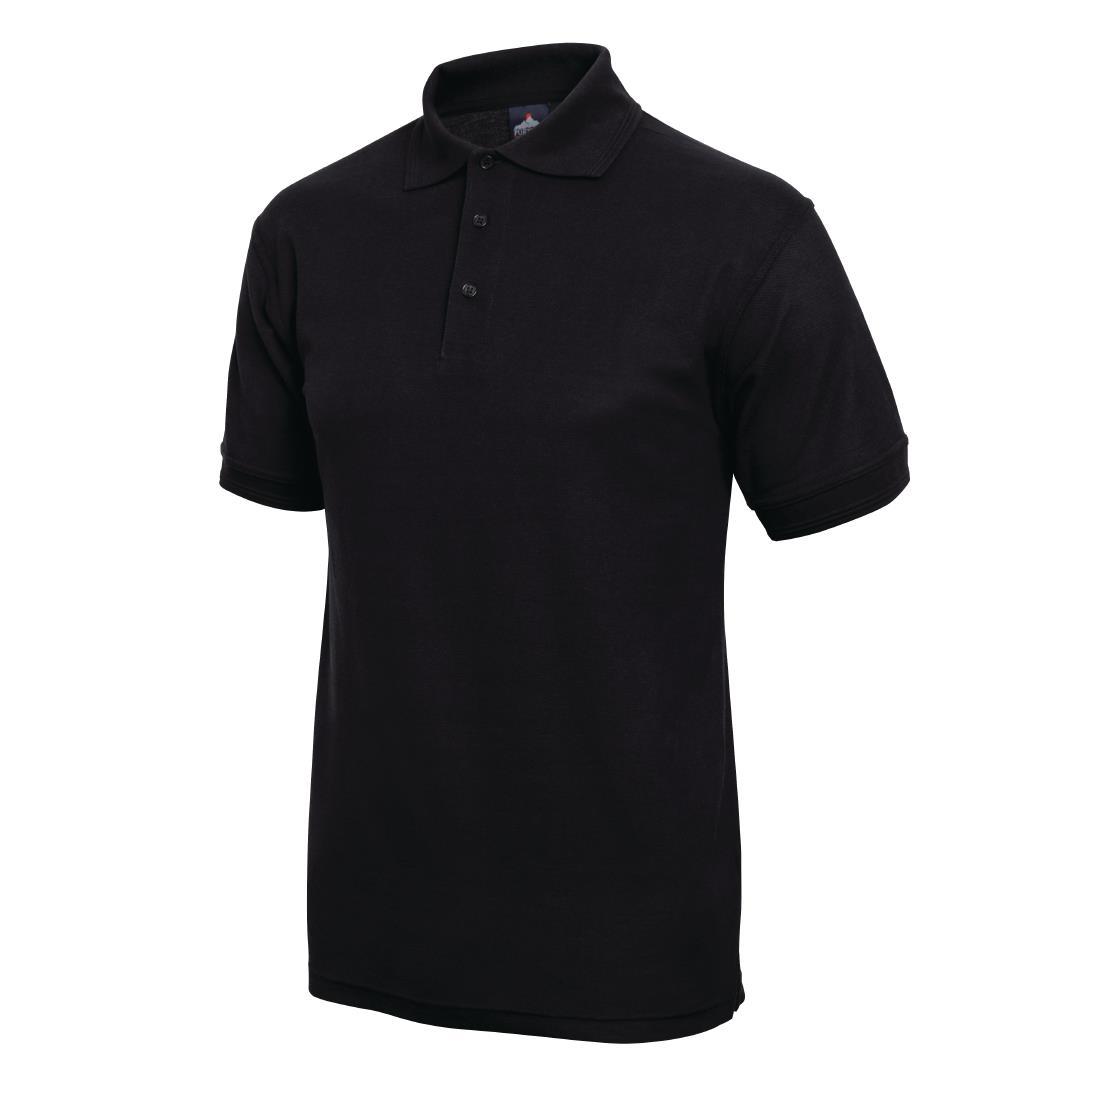 Unisex Polo Shirt Black XL - A735-XL  - 2